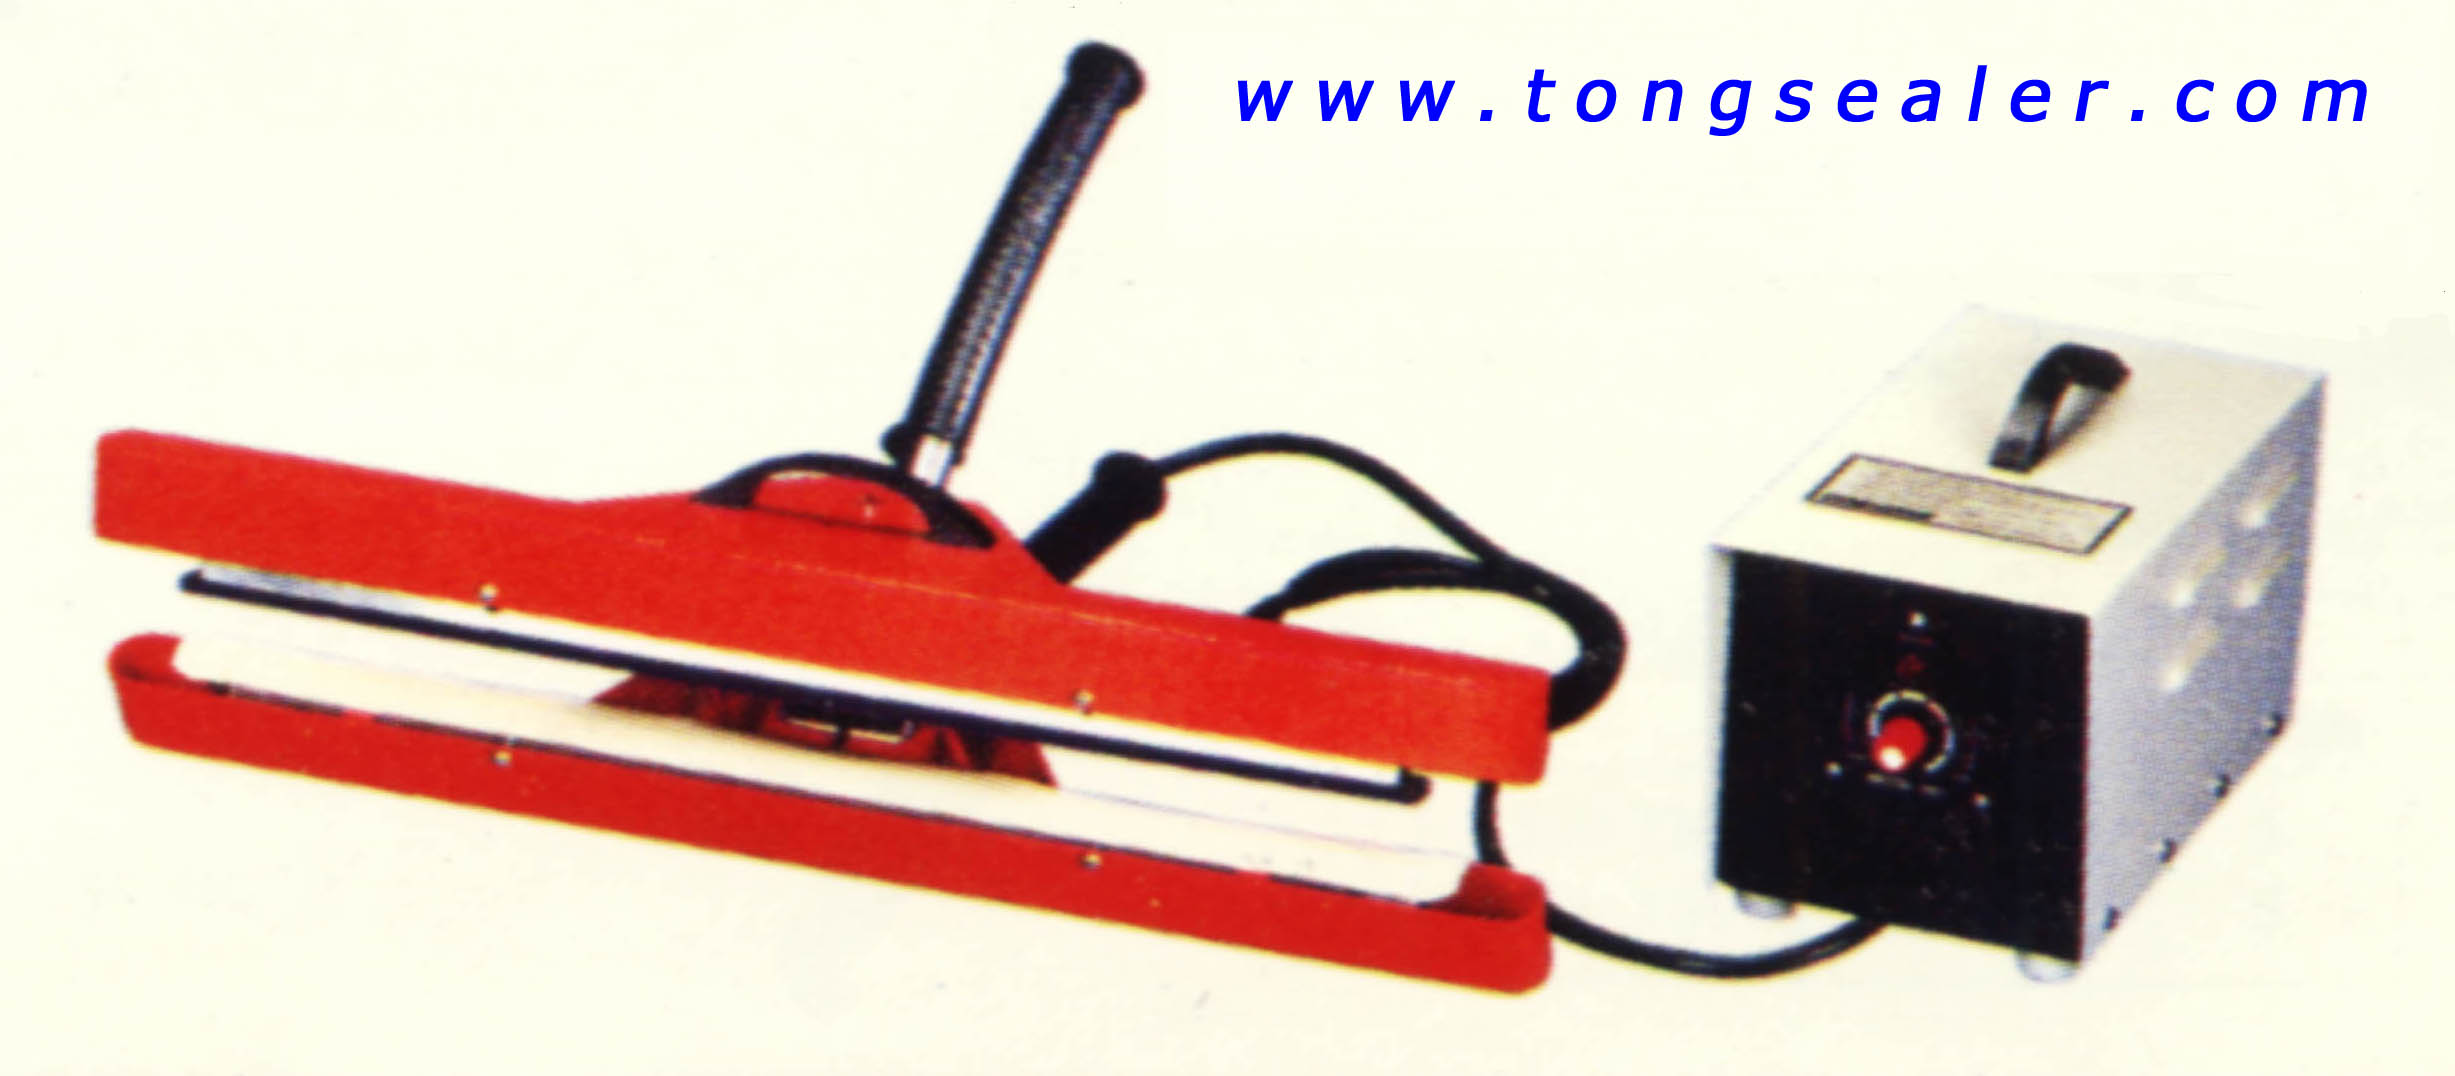 Portable Propack Tong Sealer